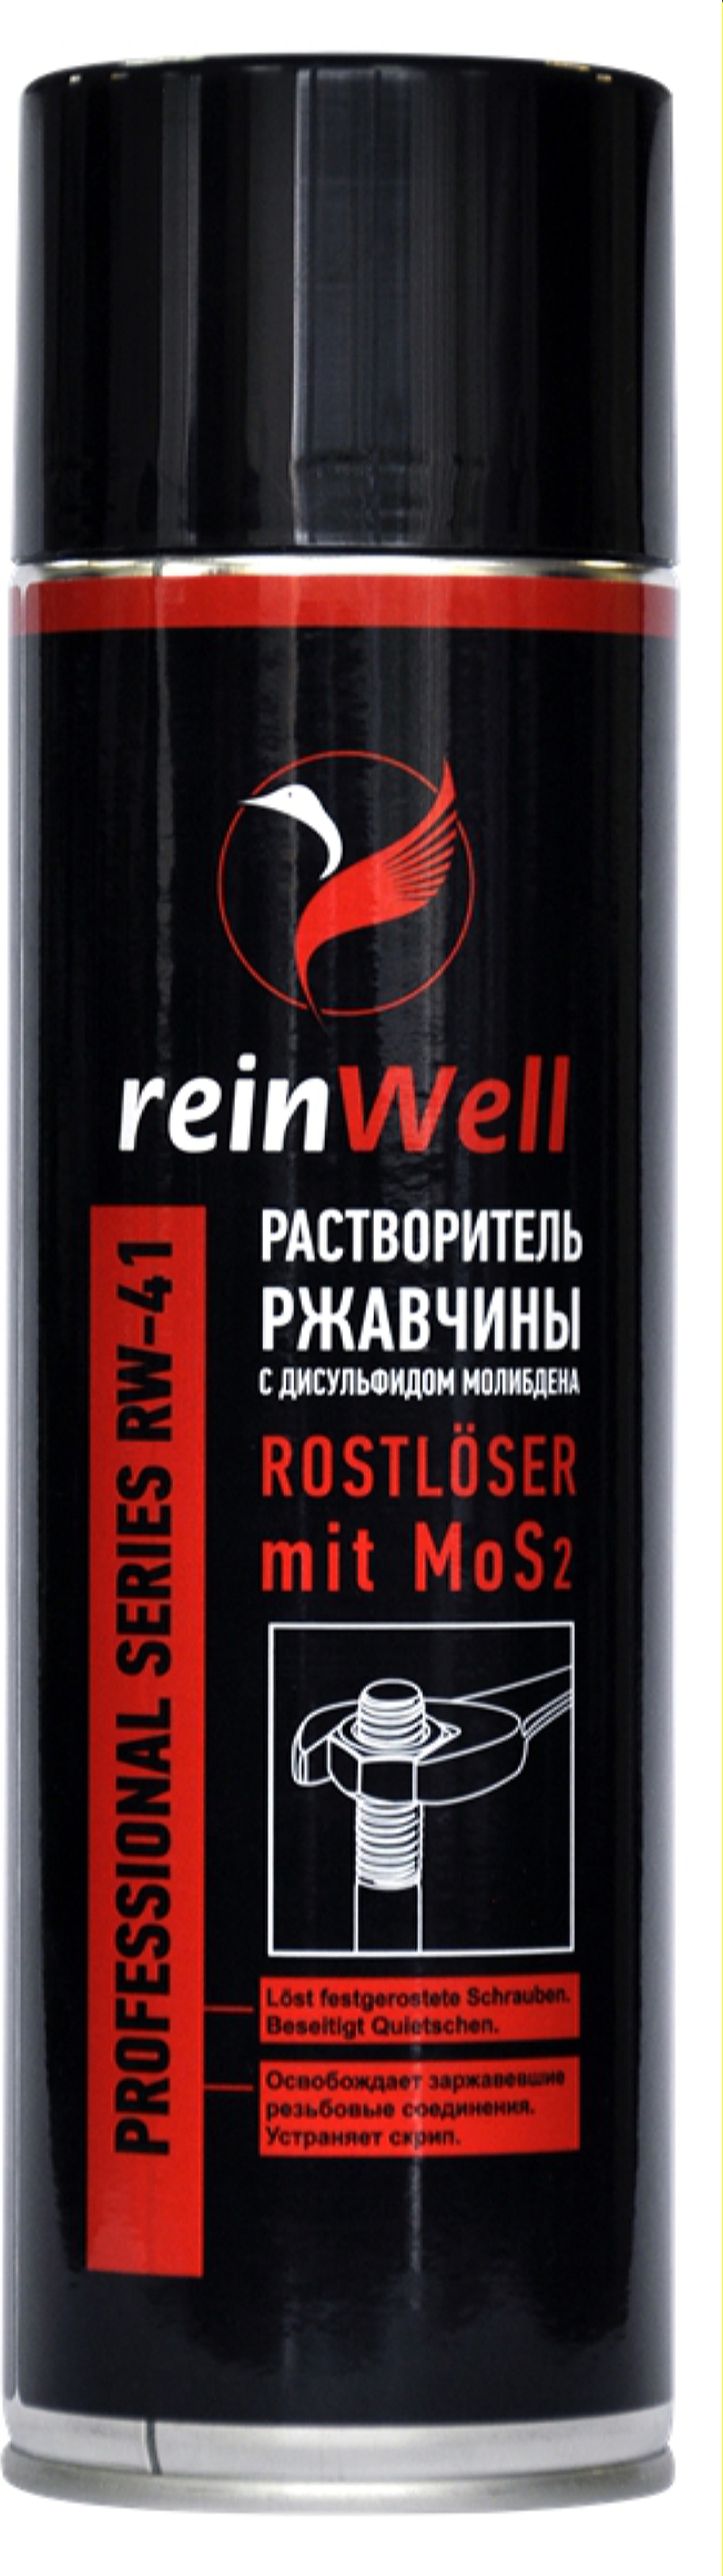 REINWELL 3242 Reinwell раствор.ржавчины с дисульф.молибдена mos2 rw 41 (0,5л)